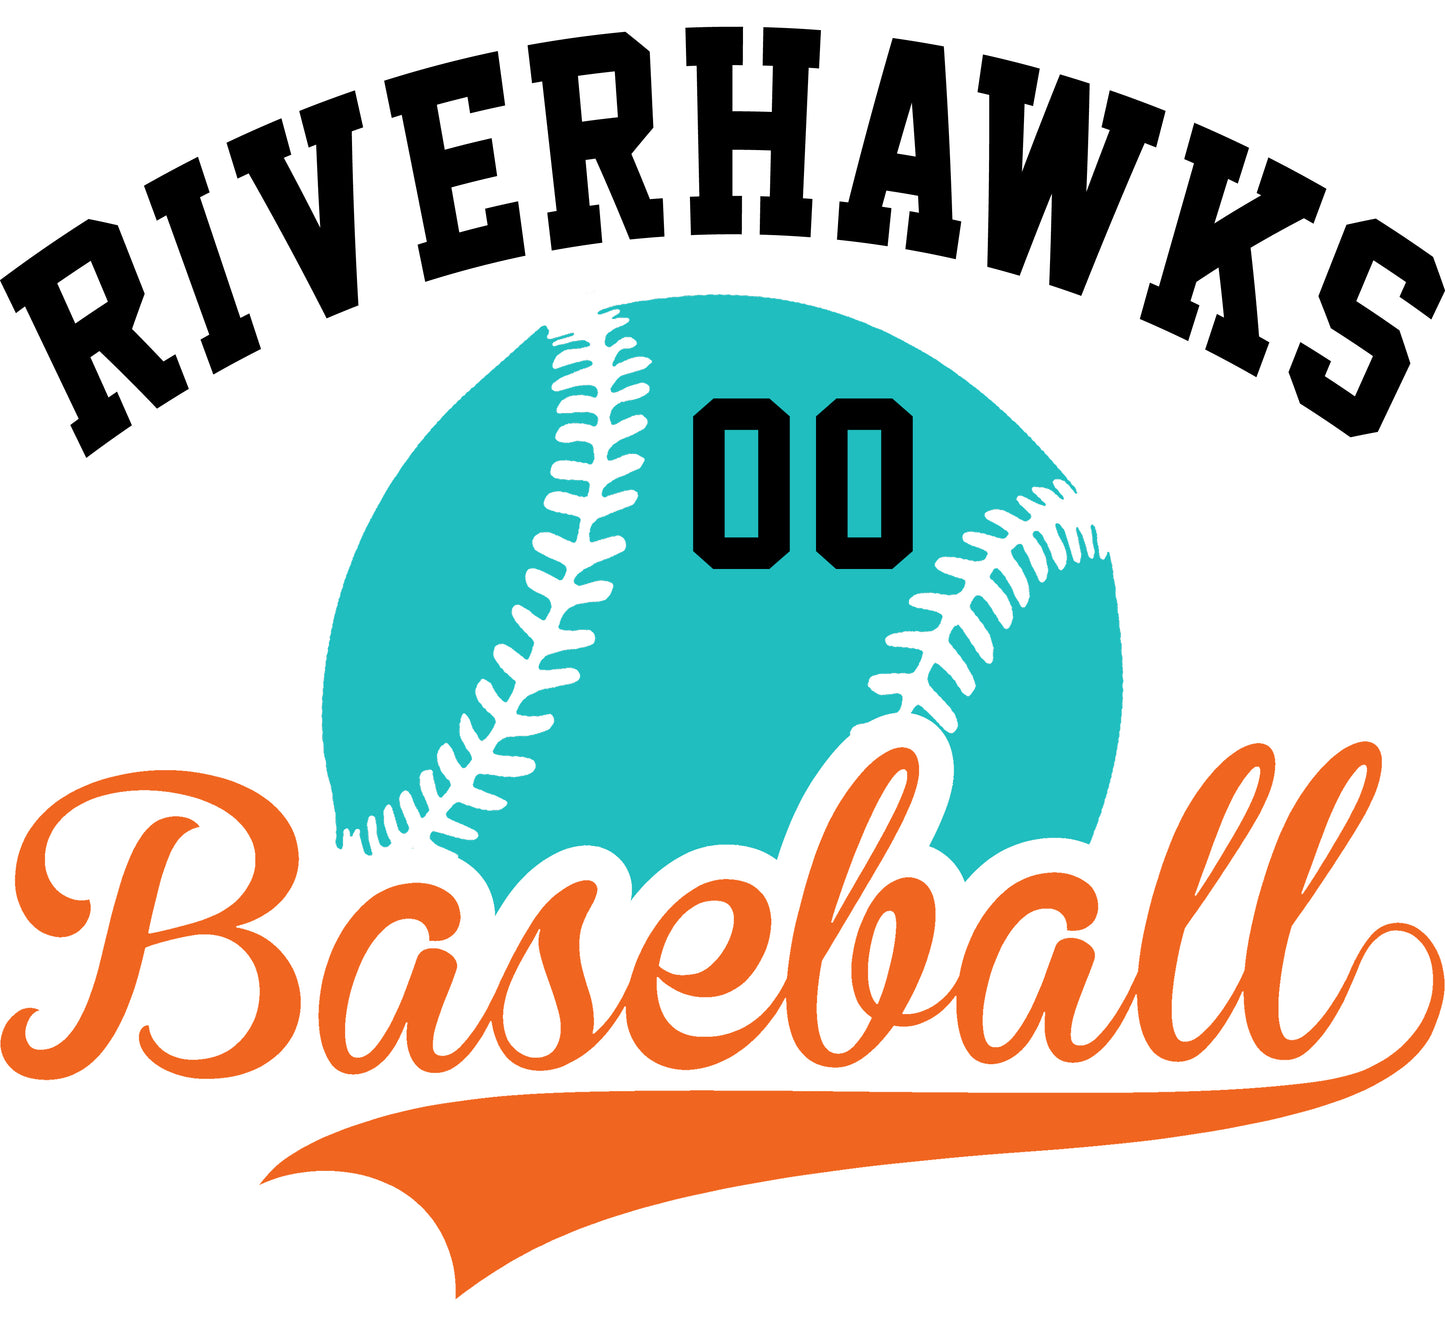 Riverhawks Baseball - CUSTOMIZABLE